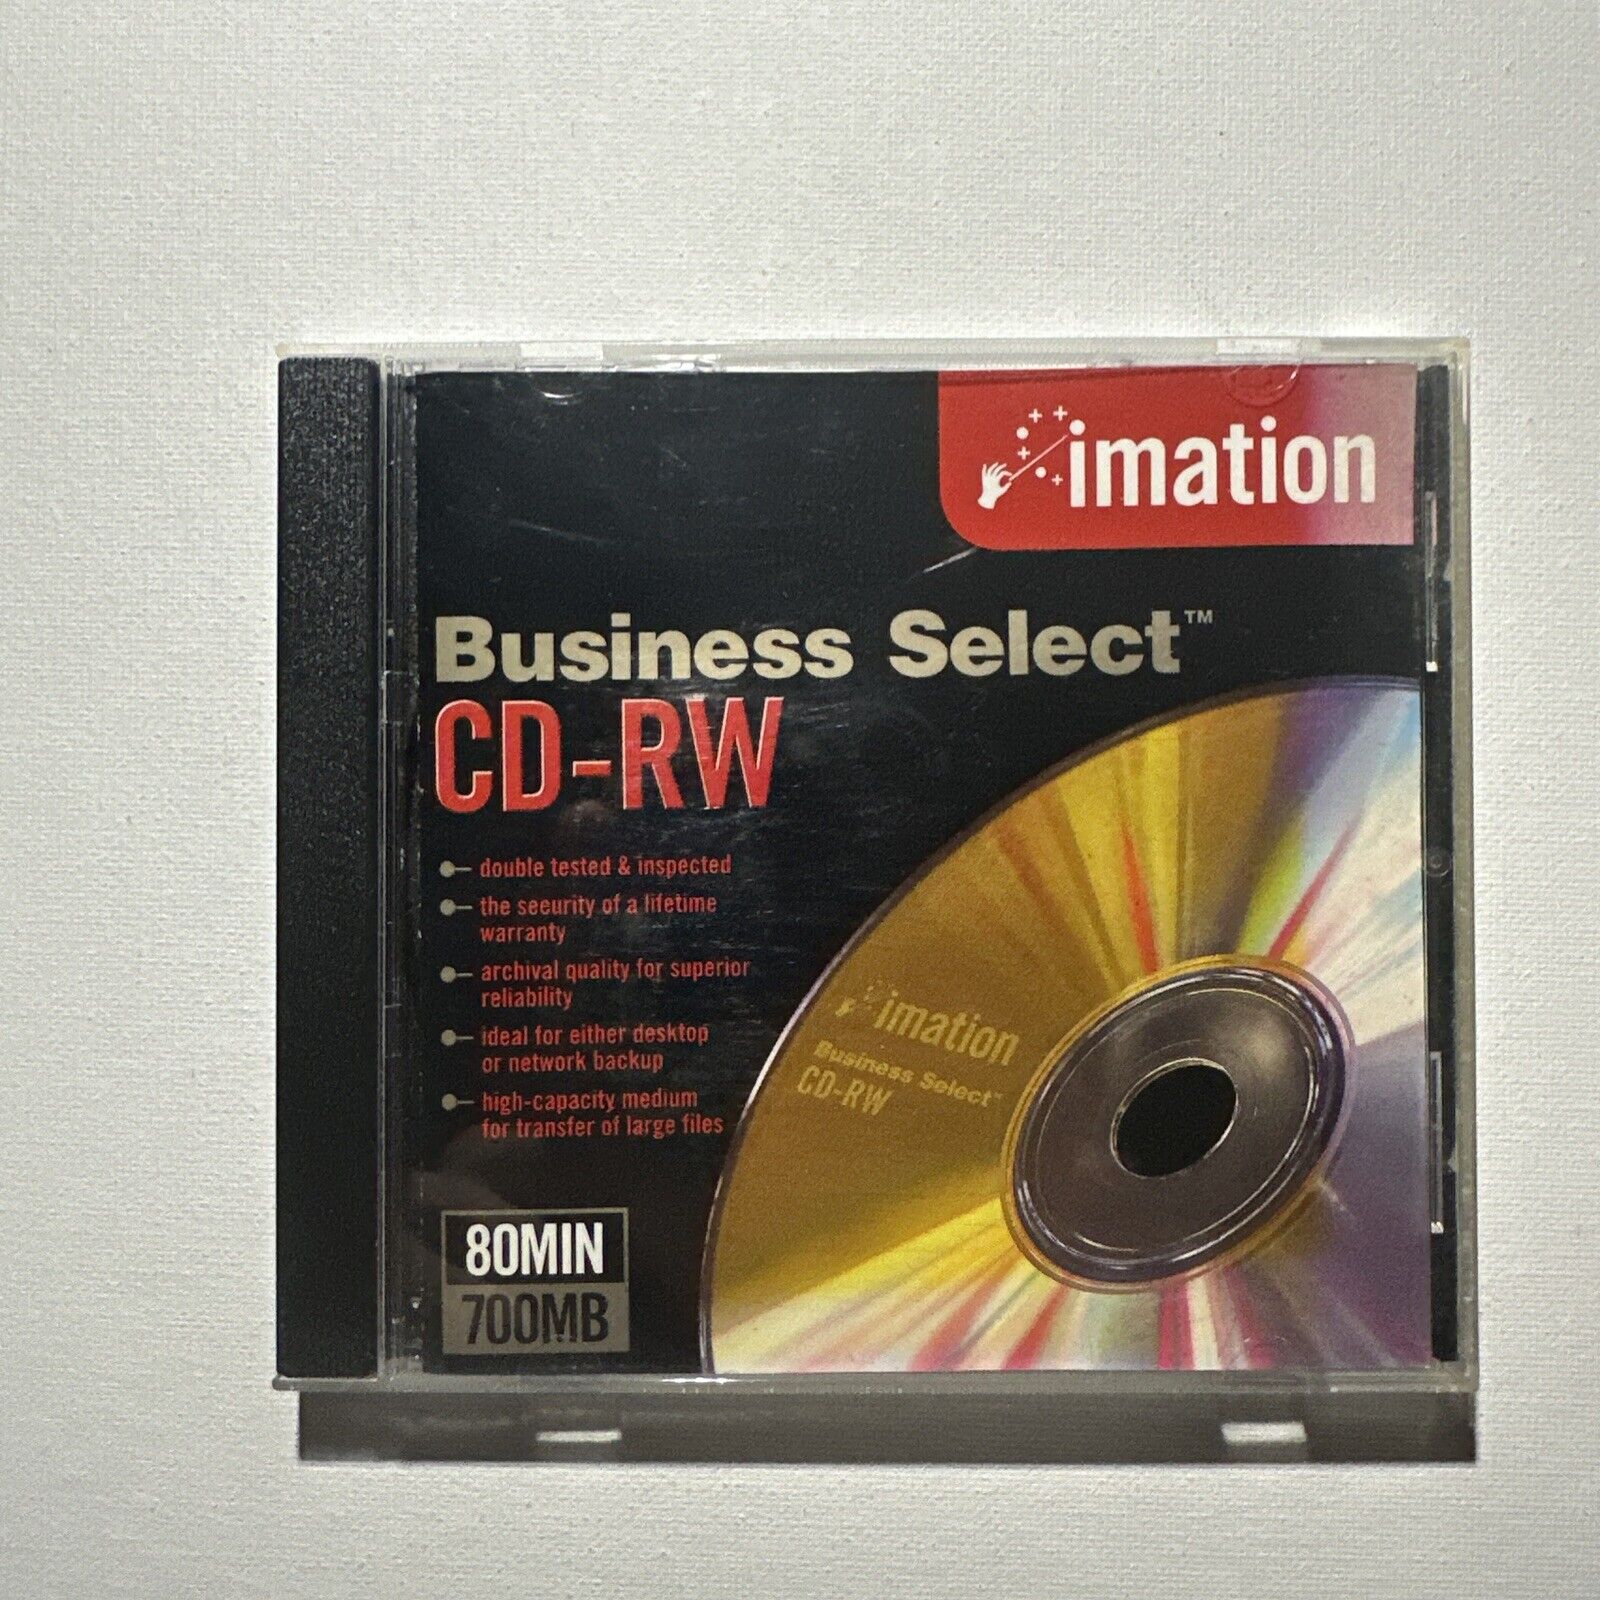 Imation Business Select CD-RW 80 Mins 700MB Desktop Network Backup